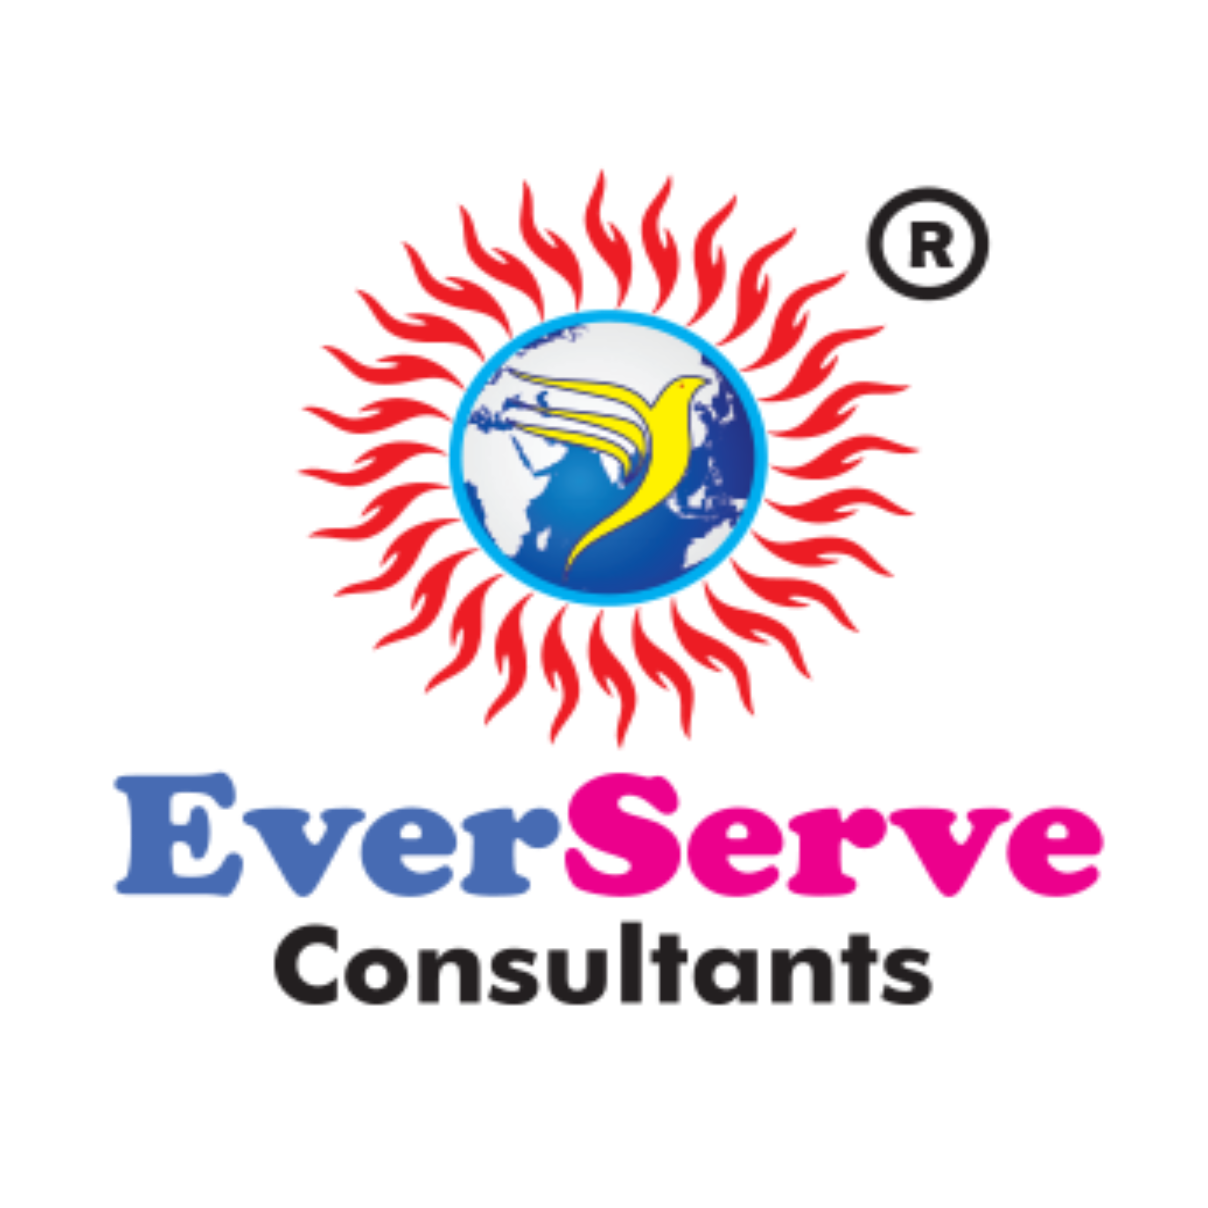 Everserve Consultants